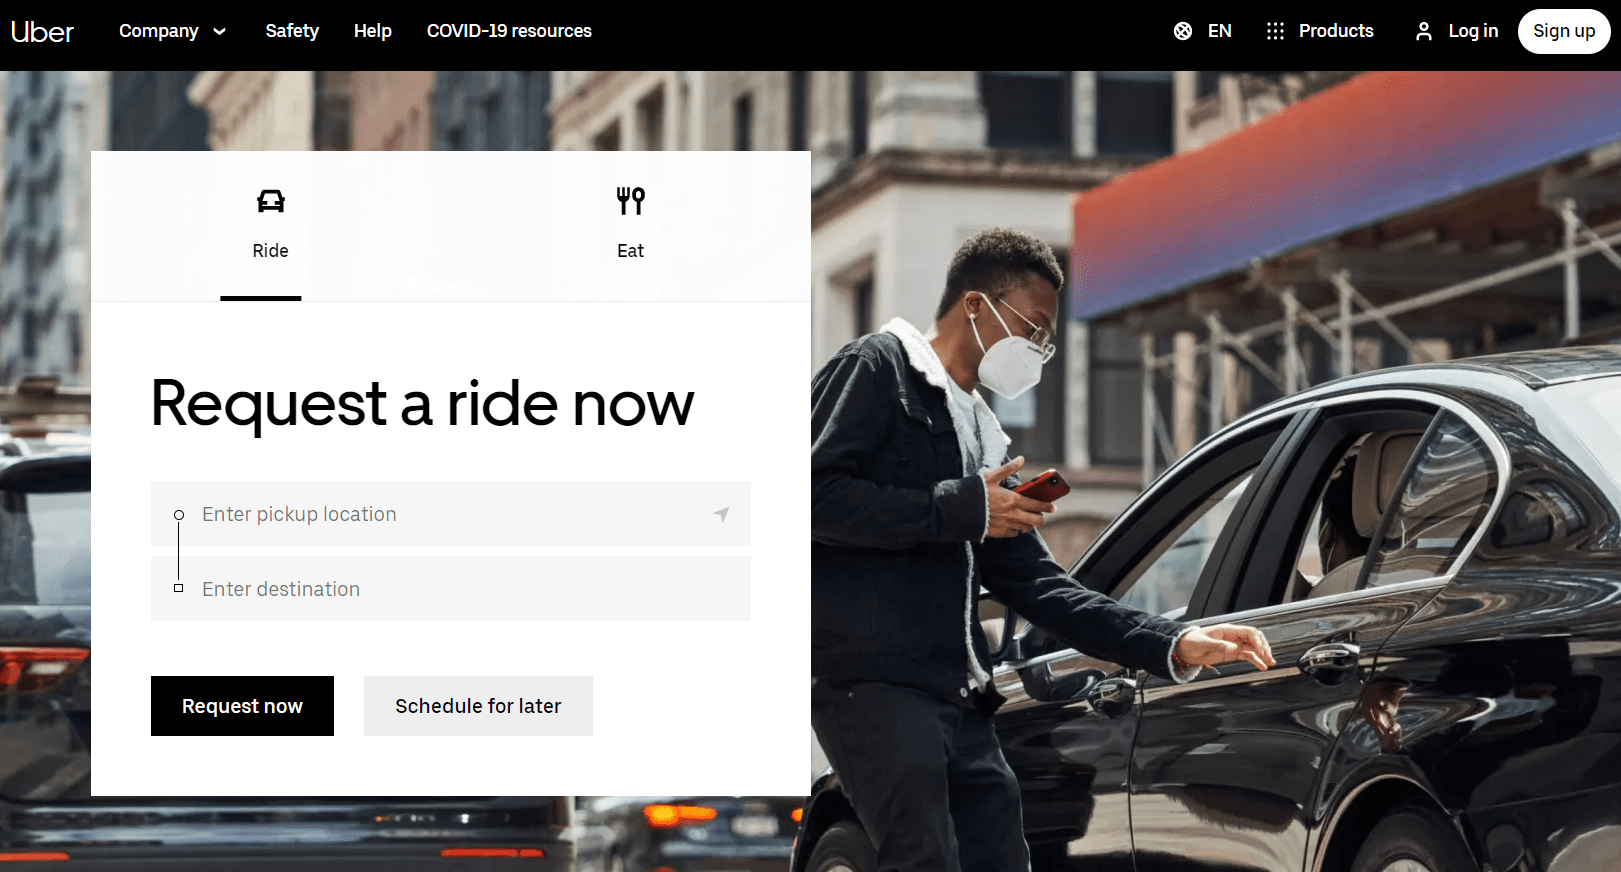 Is Uber cheaper in Japan?